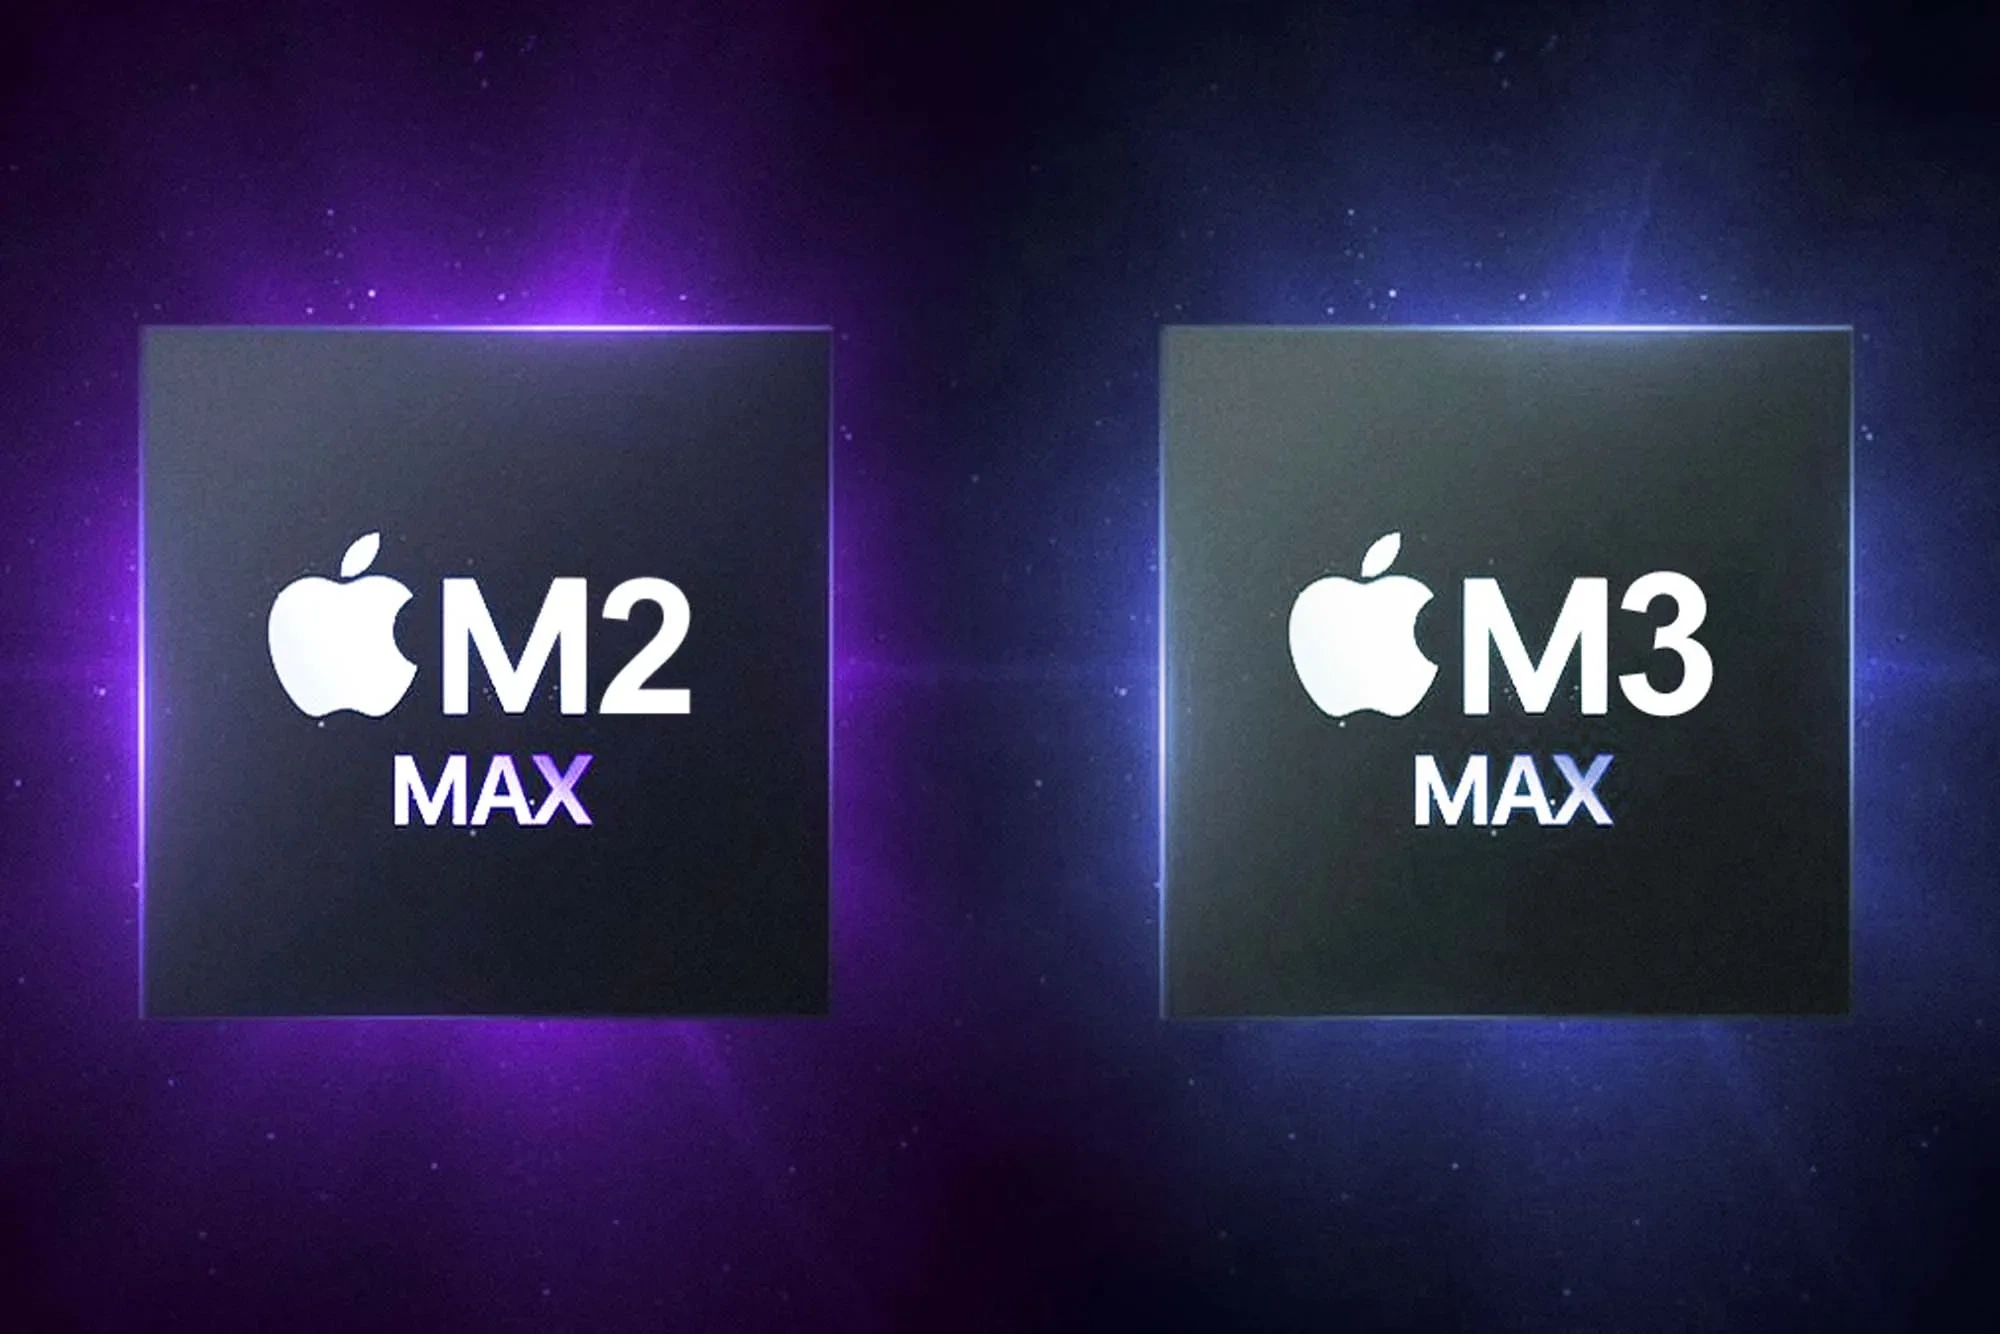 For super-duper performance: M2 Max vs. M3 Max